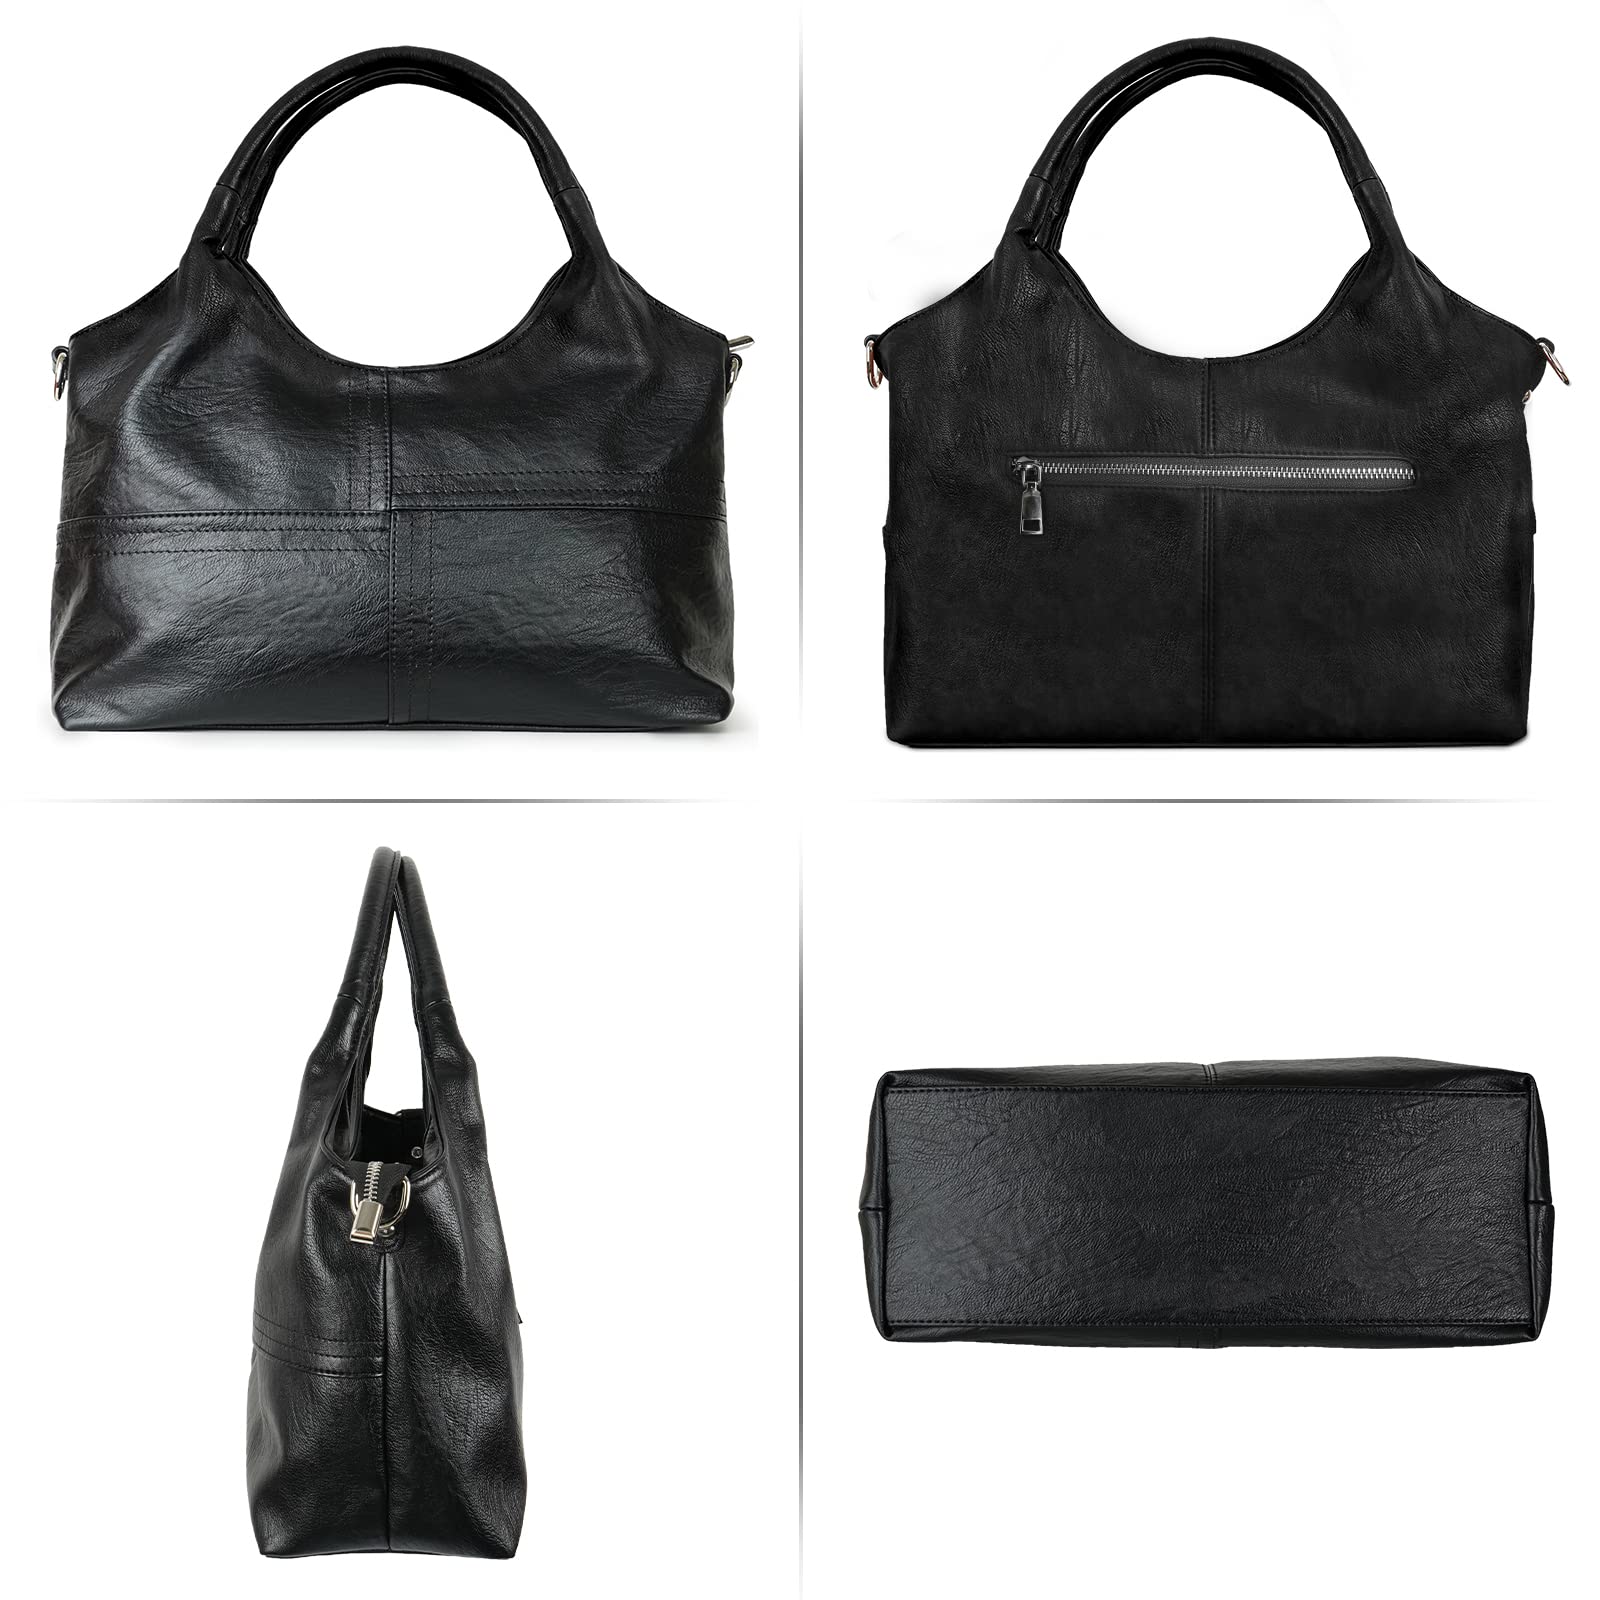 KOGTLA Womens Leather Handbags Tote Bag Shoulder Bag Top Handle Satchel Ladies Purse Crossbody Hobo Bag